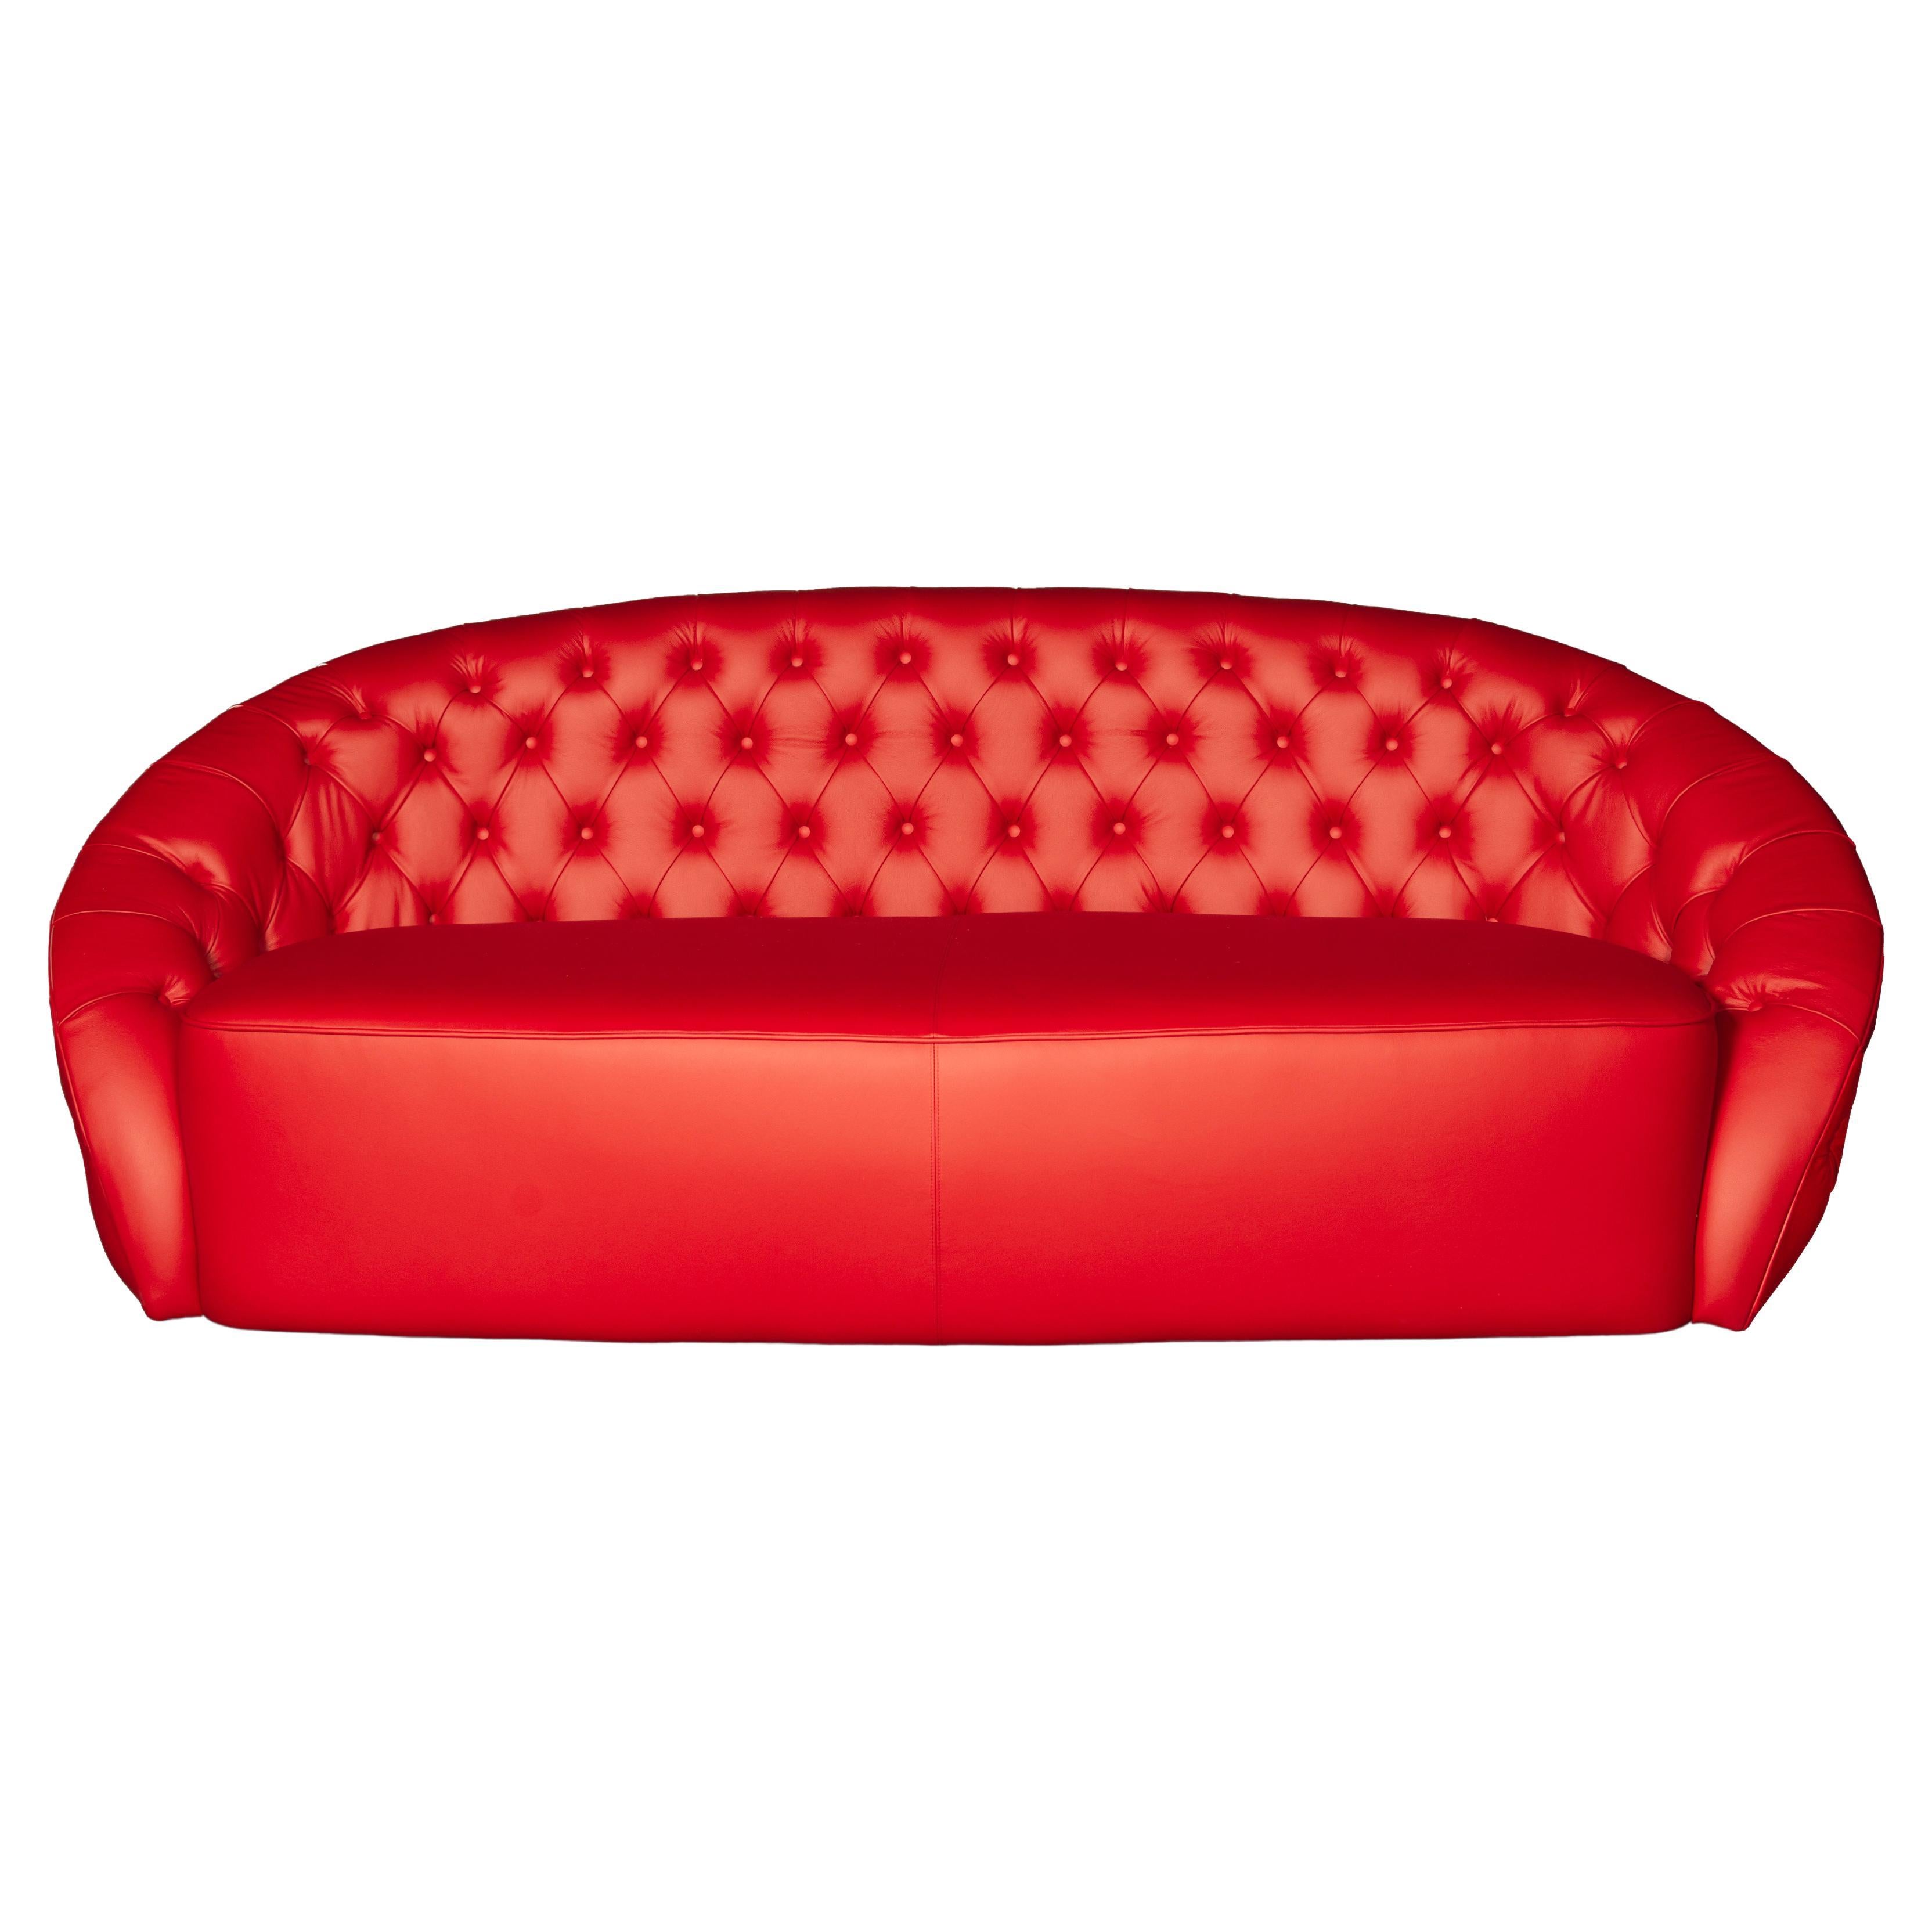 Sofa Rund Capitonné, Rotes Leder, cm 250x115, Made in Italy